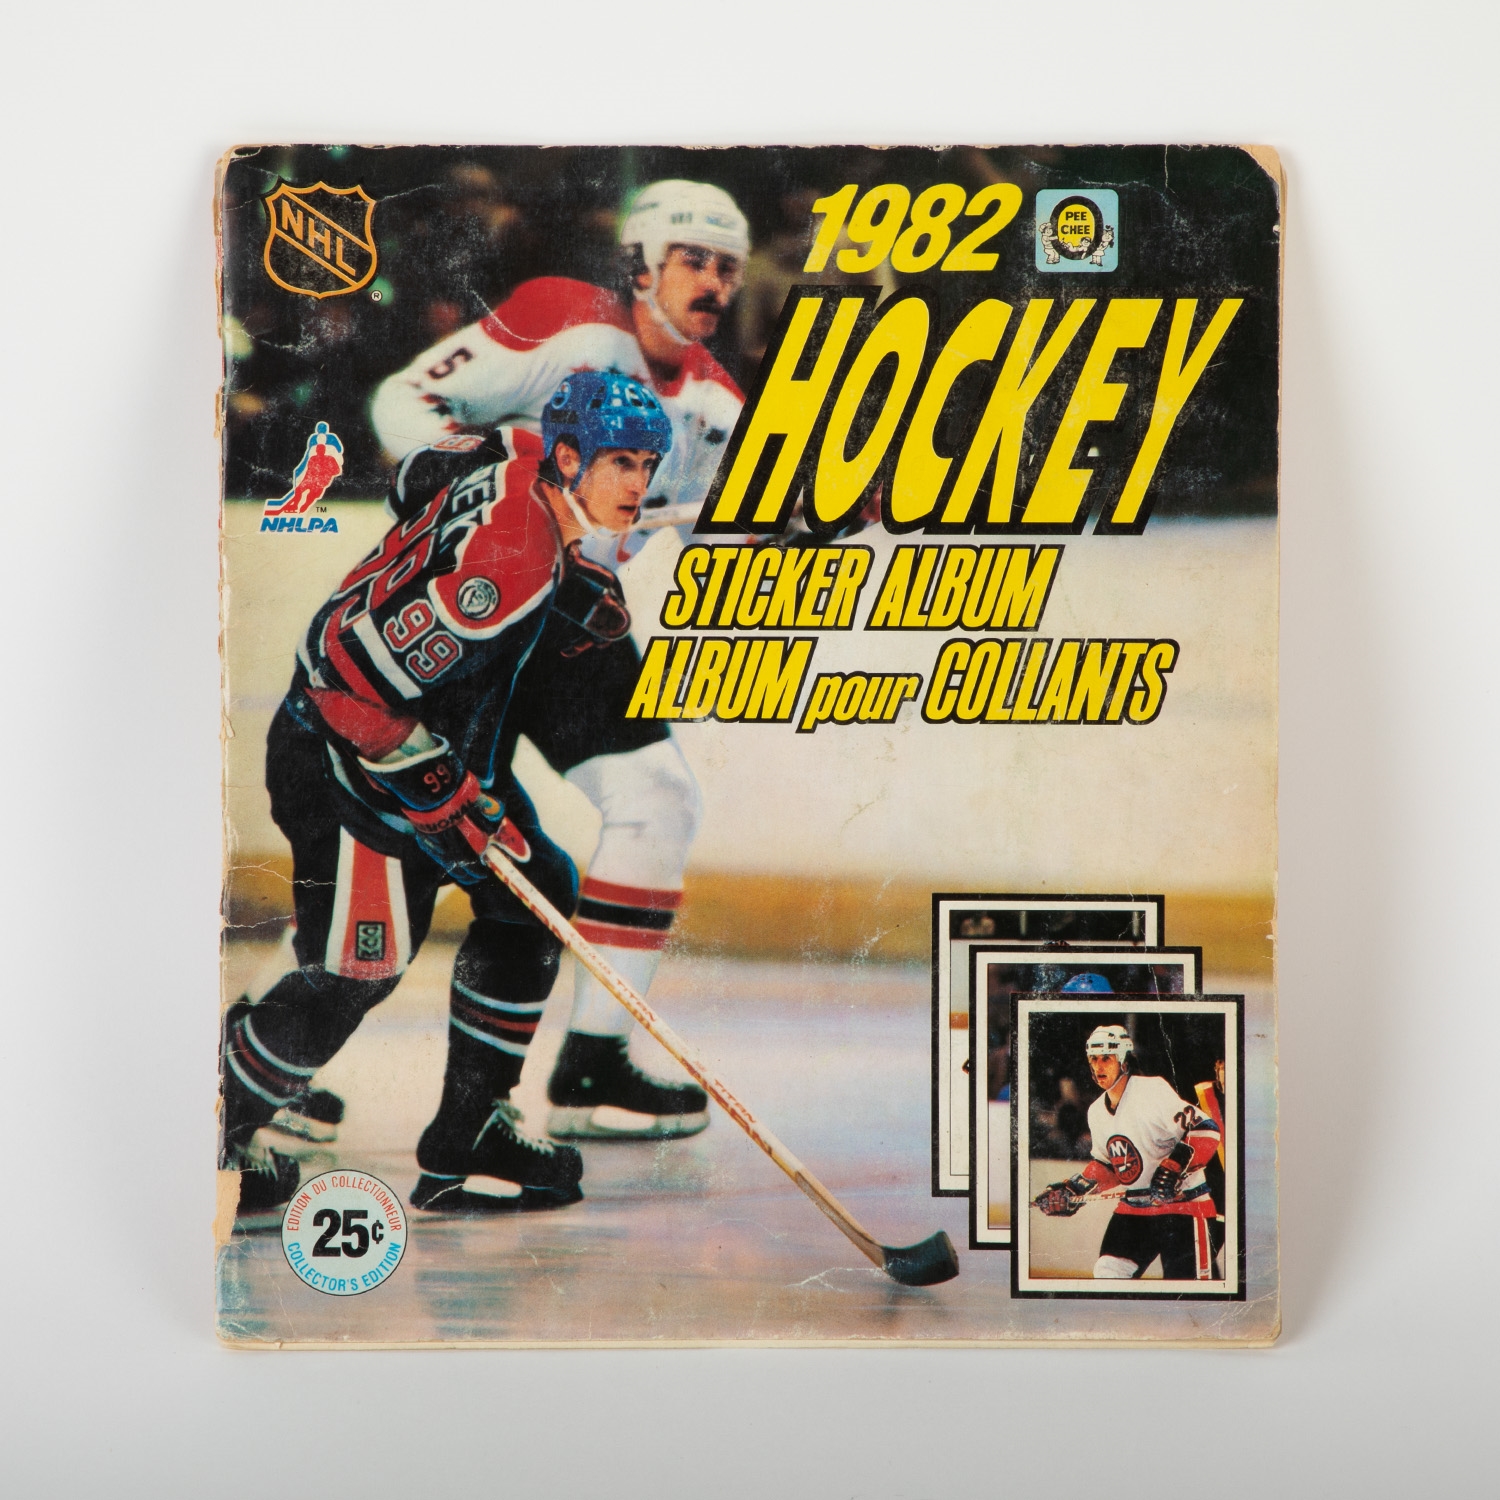 1982 O-Pee-Chee Hockey Sticker Album Complete With Gretzky